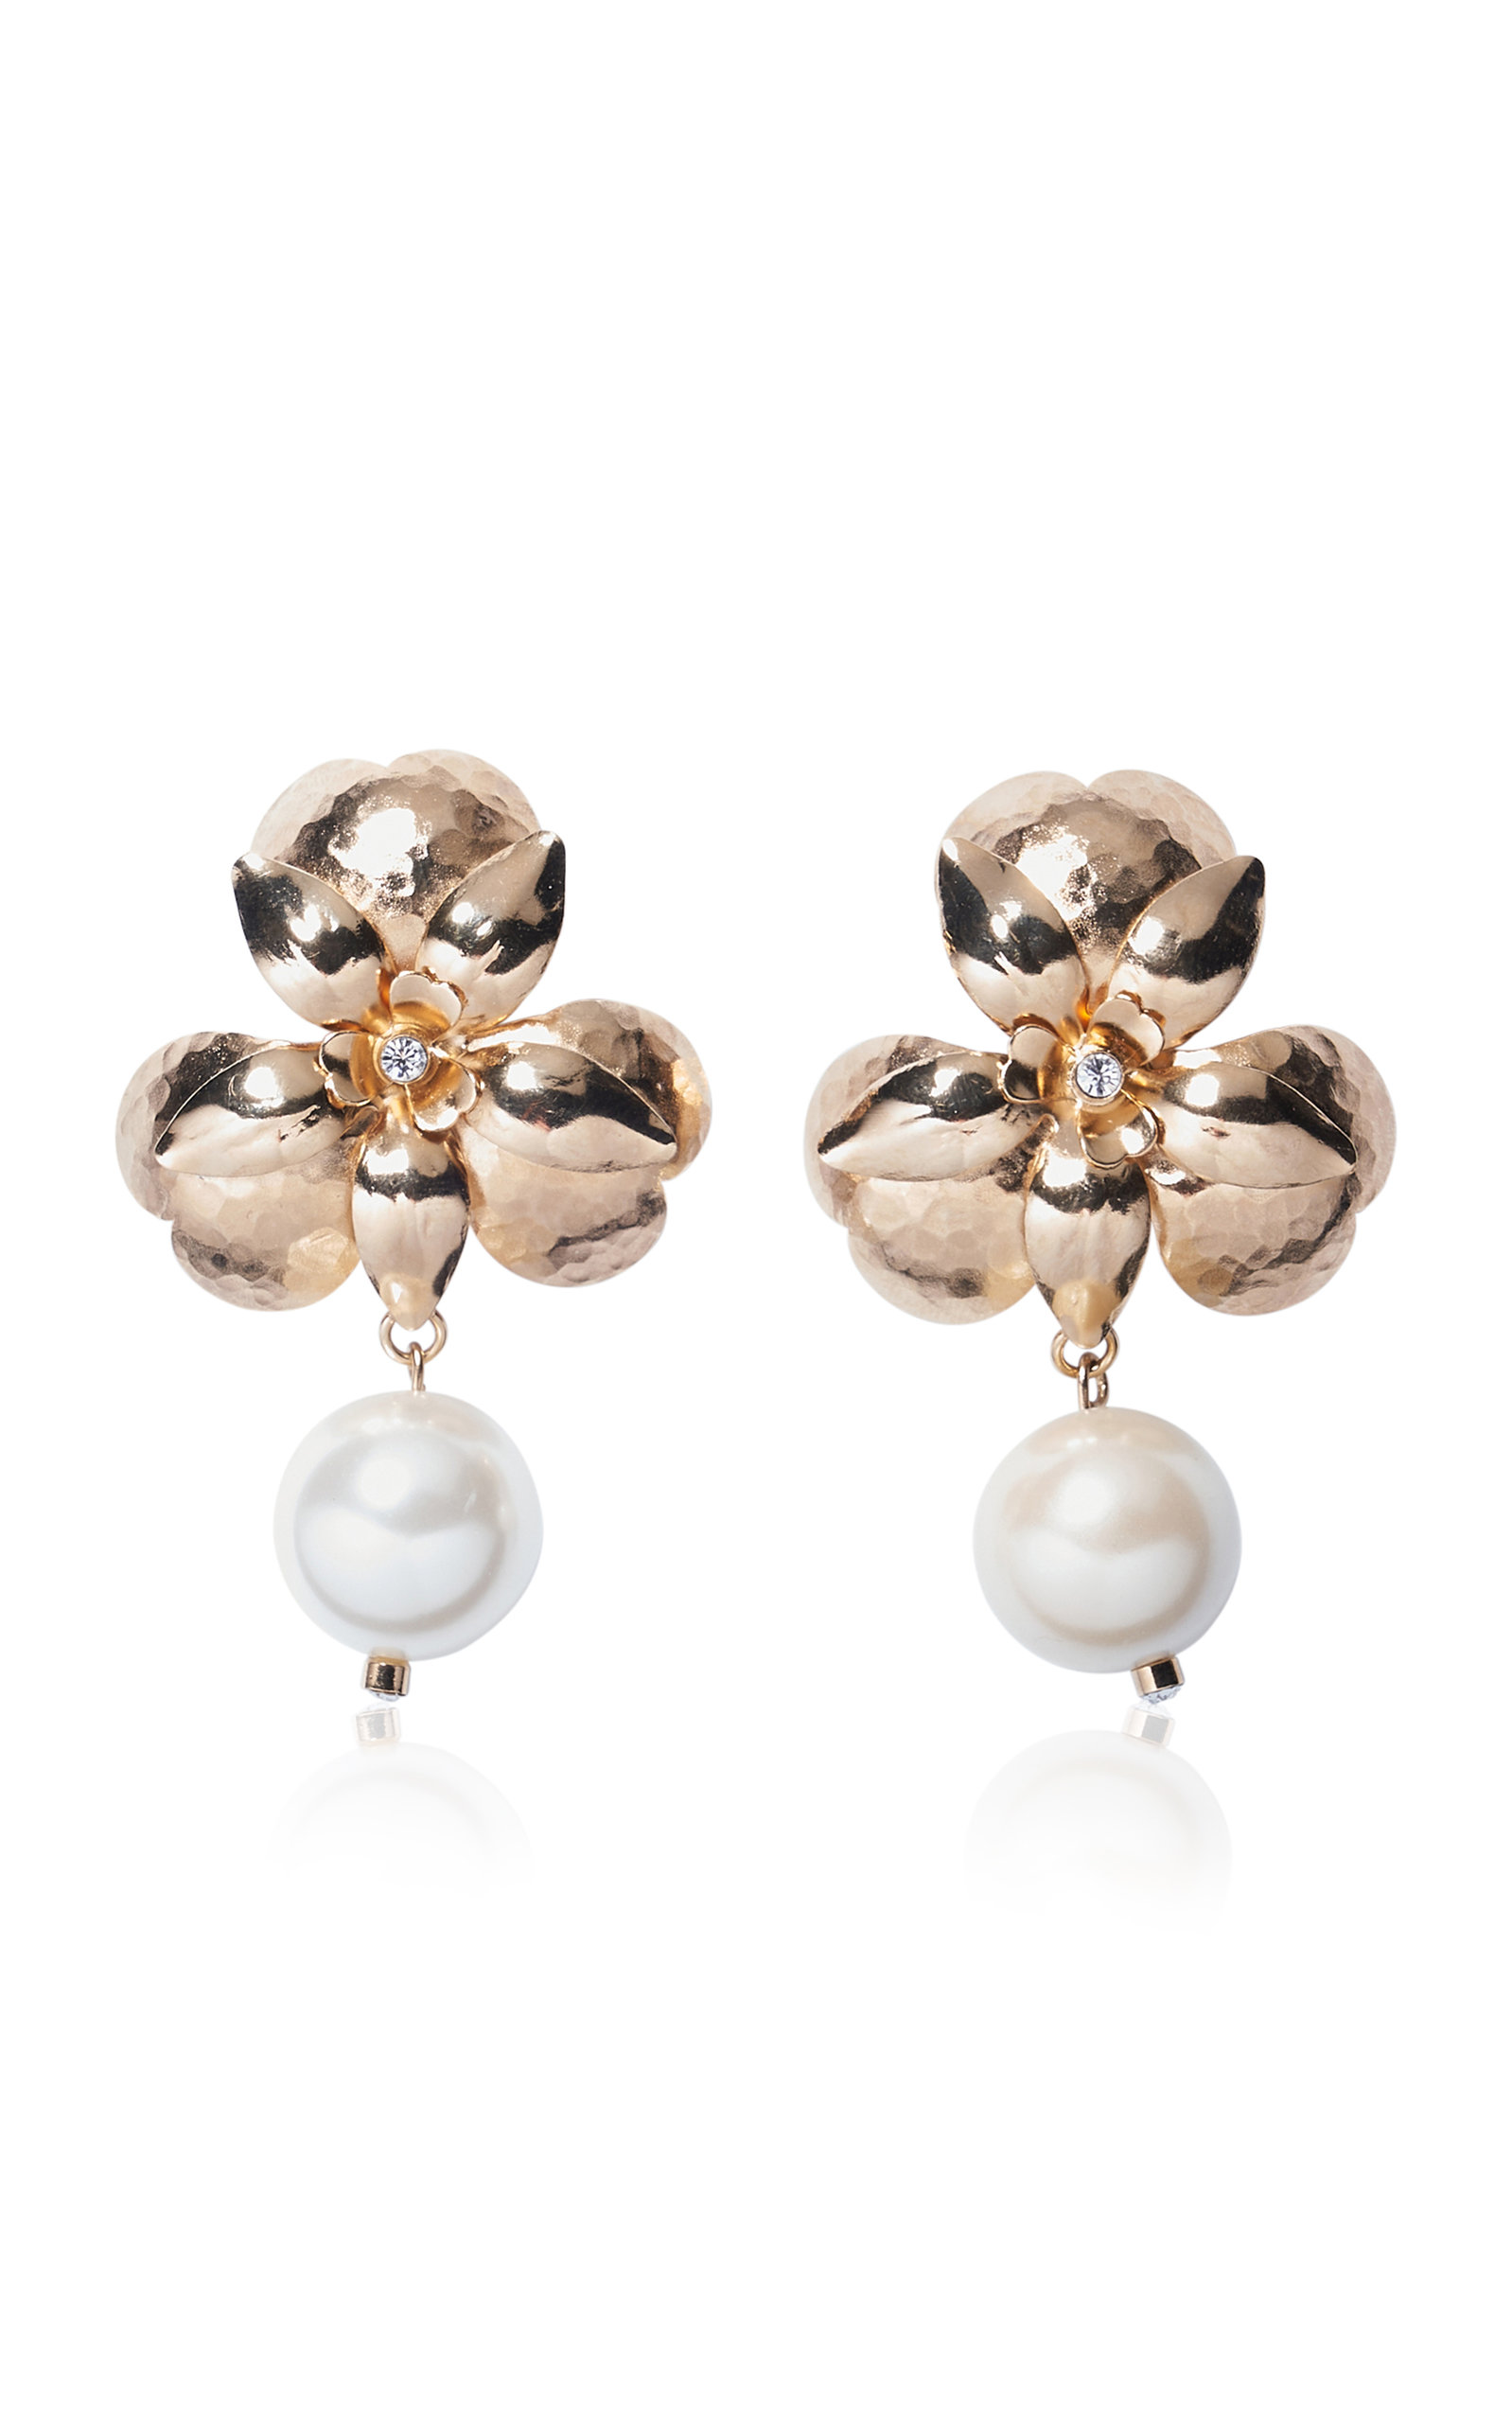 Carolina Herrera - Women's Brass Flower and Pearl Drop Earrings - Gold - Moda Operandi - Gifts For Her